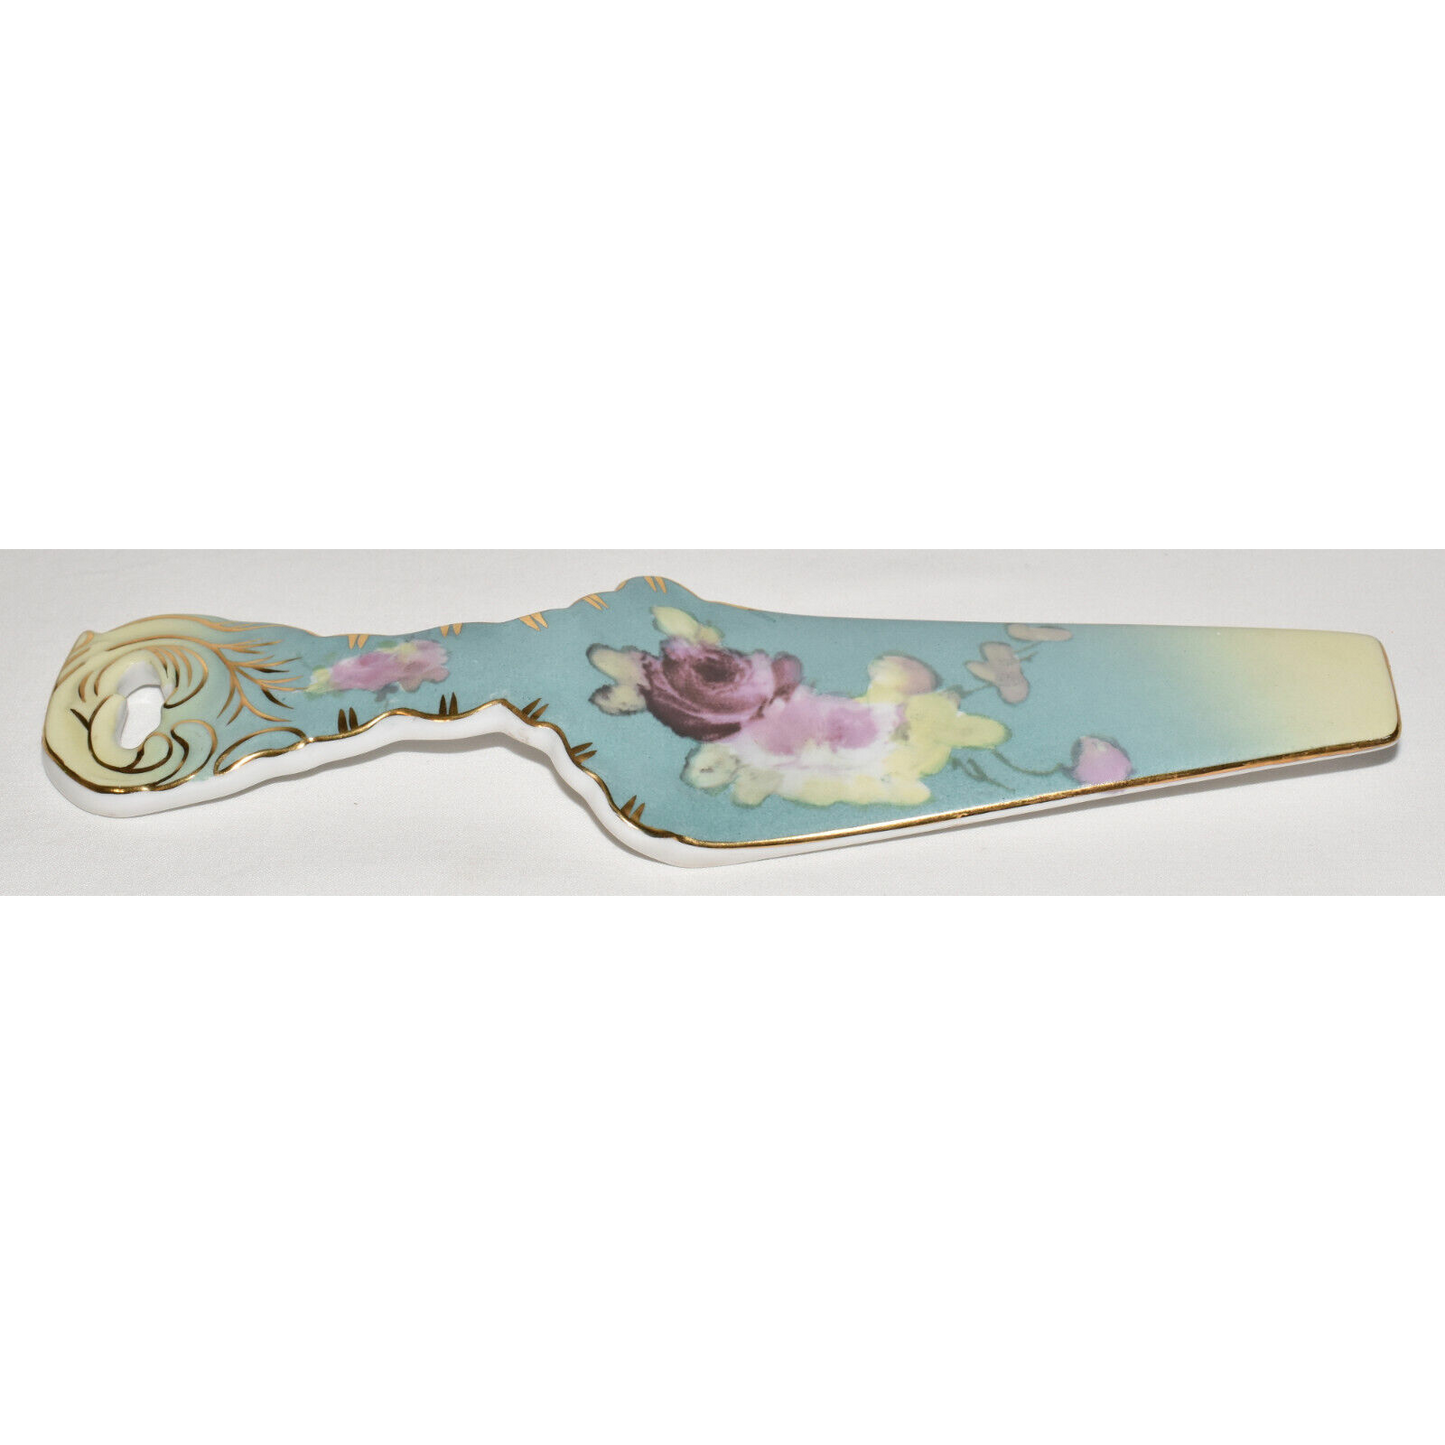 Vintage Porcelain Hand Painted Turquoise Pie Cake Server Floral Motif Gilt Trim